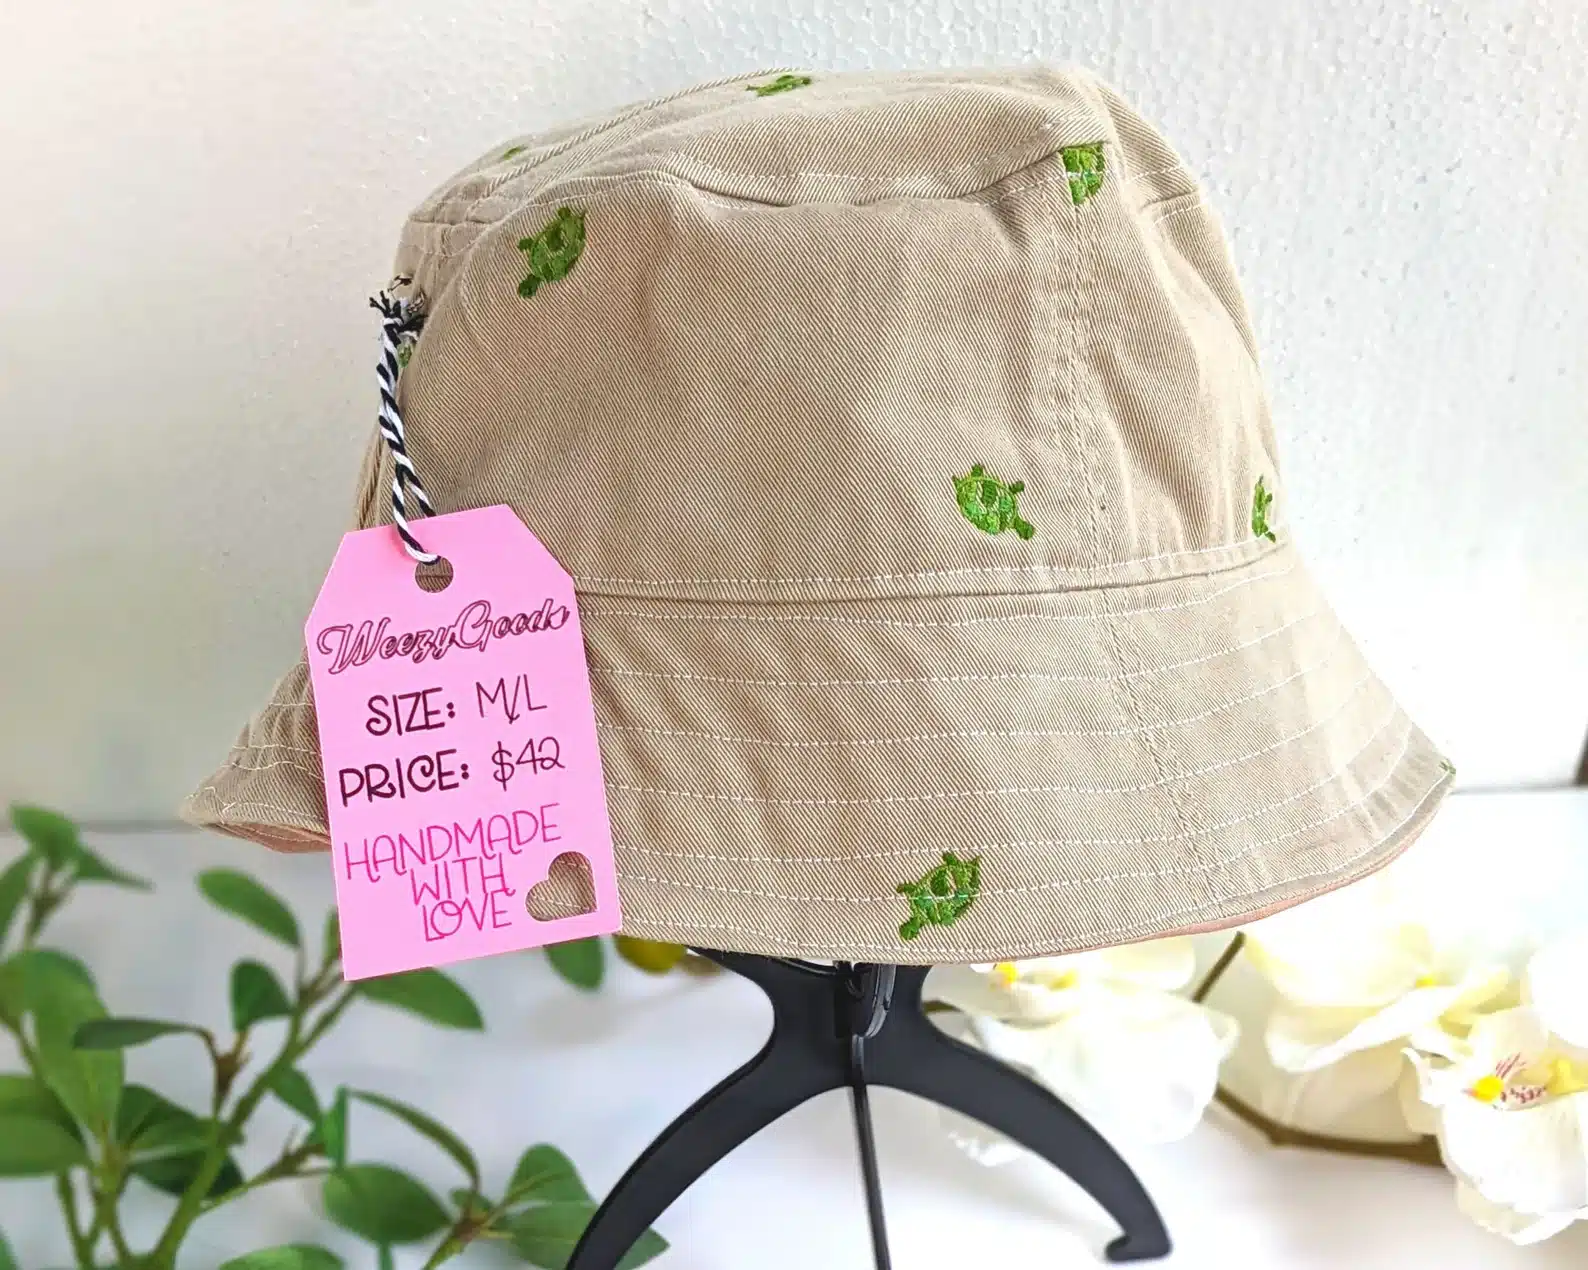 Turtle Bucket Hat